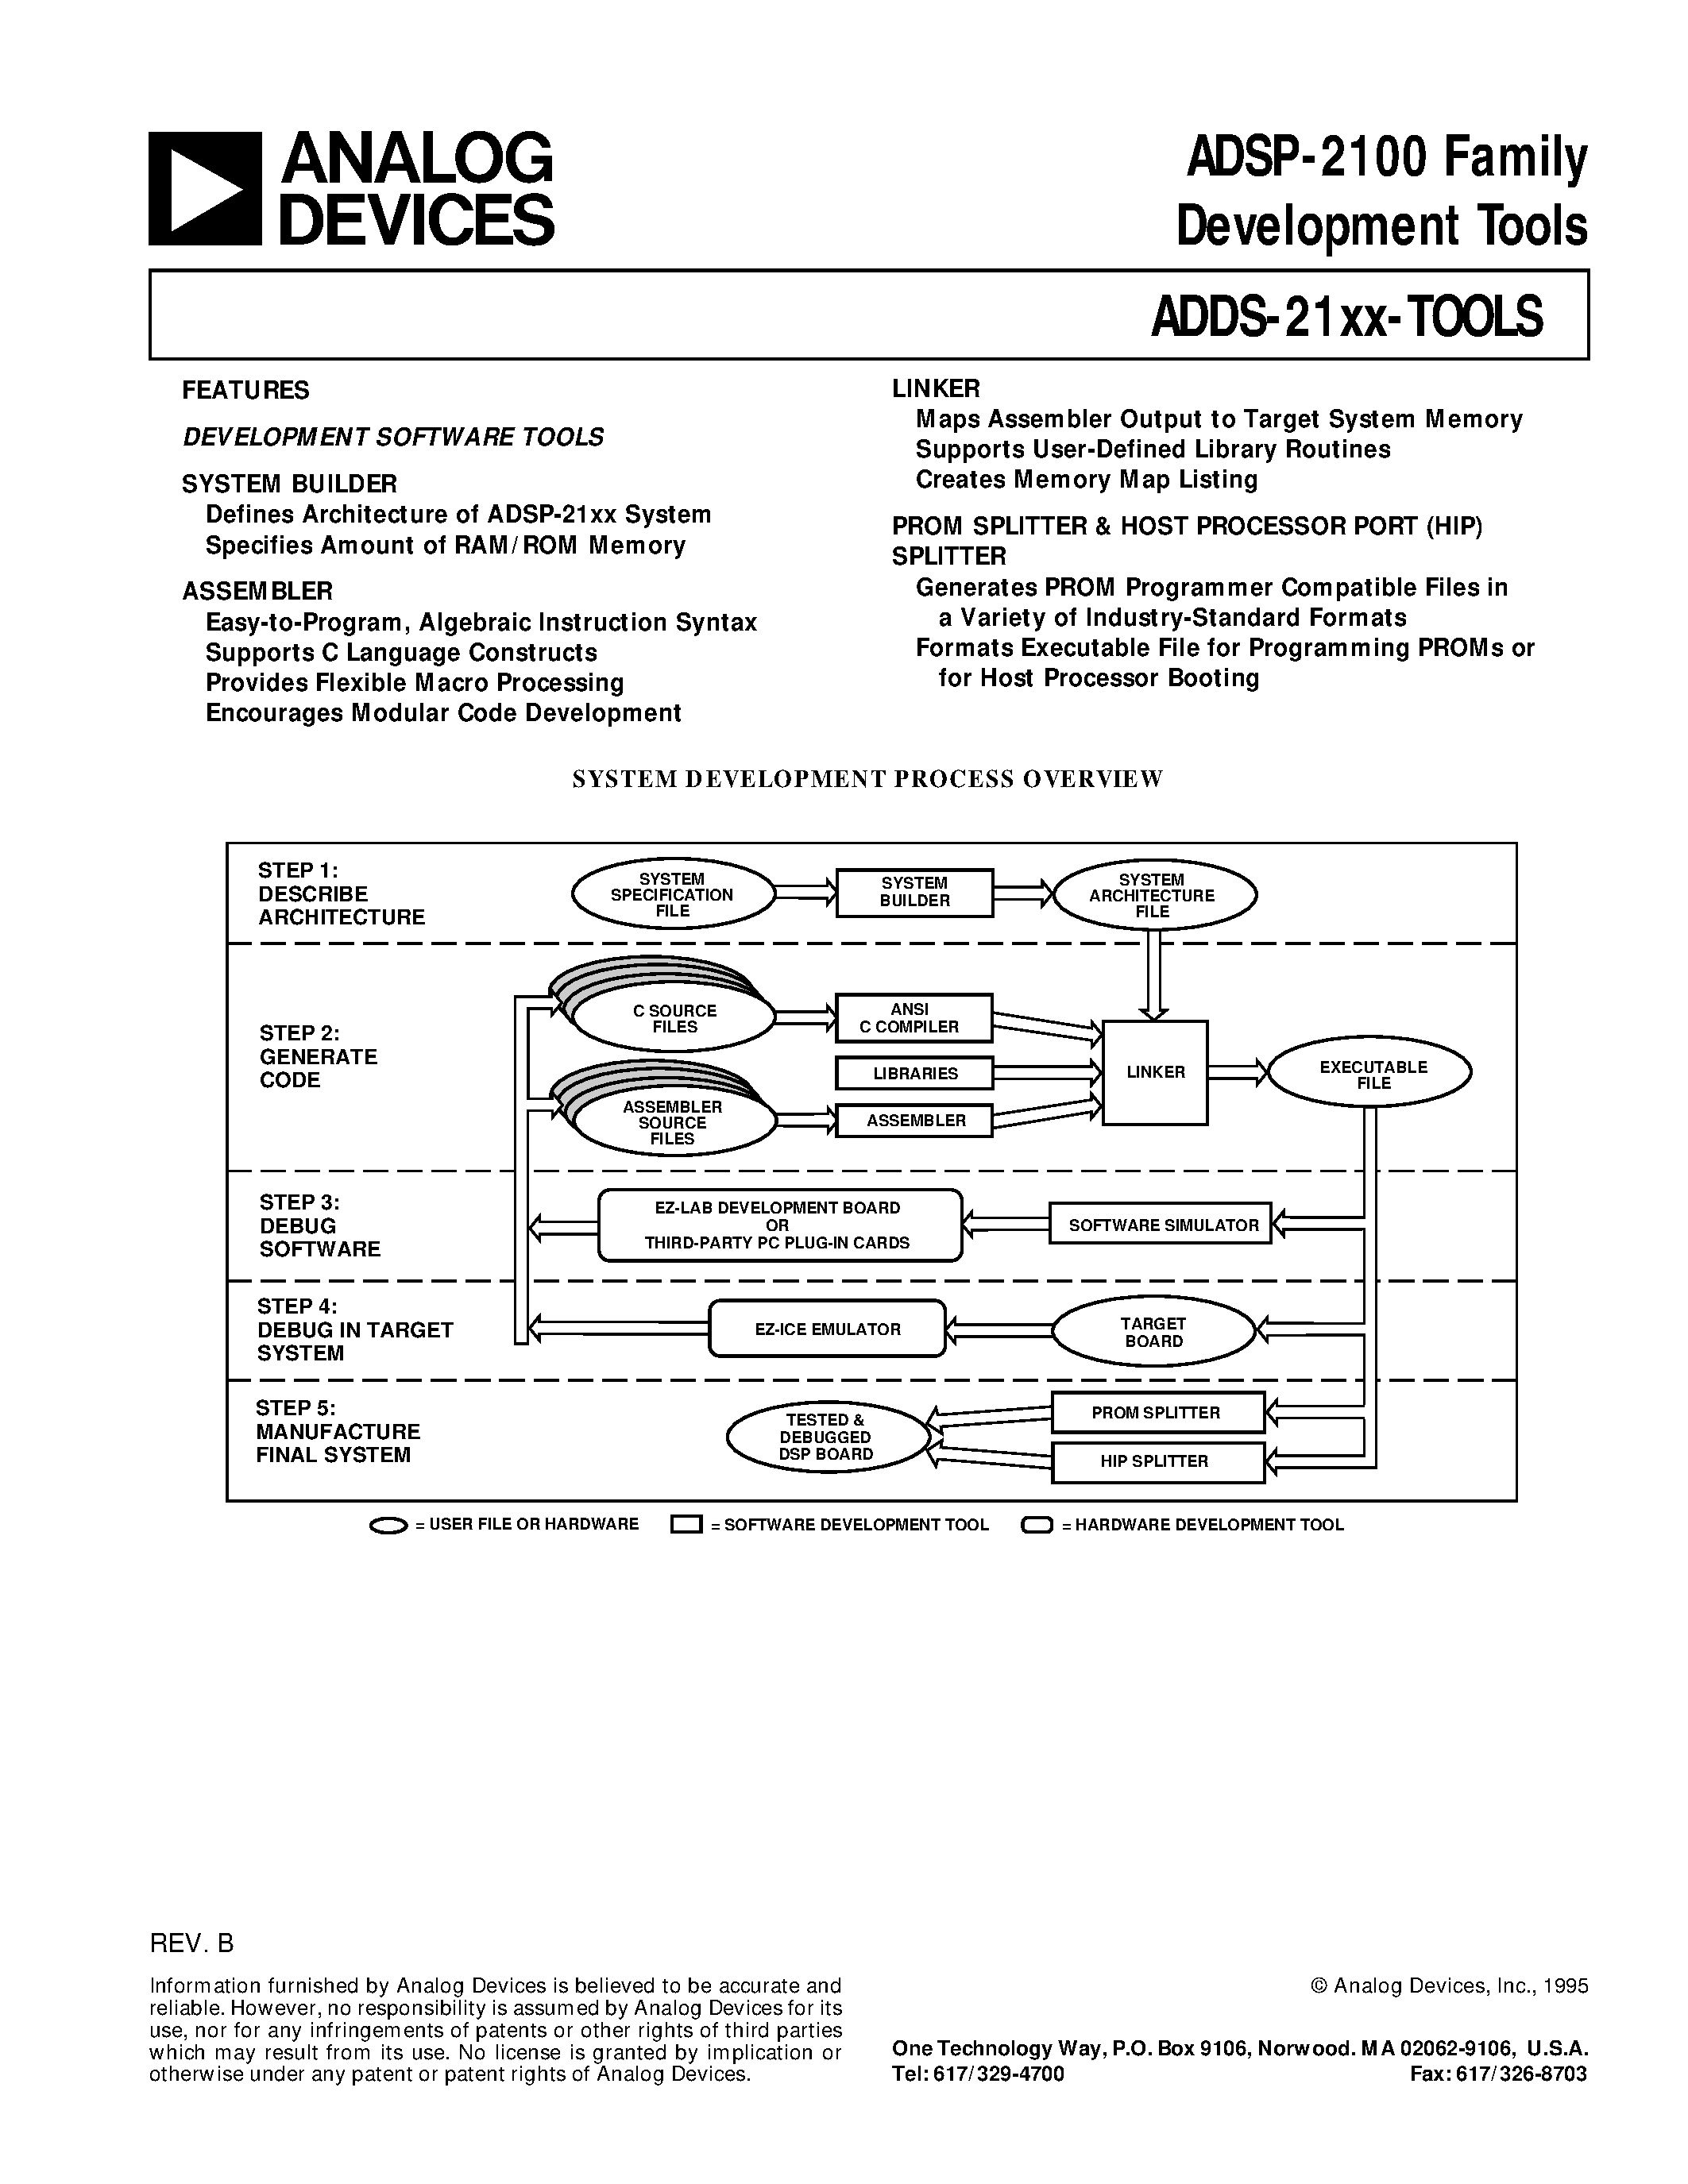 Даташит ADDS-21XX-SW-PC - ADSP-2100 Family Development Tools страница 1